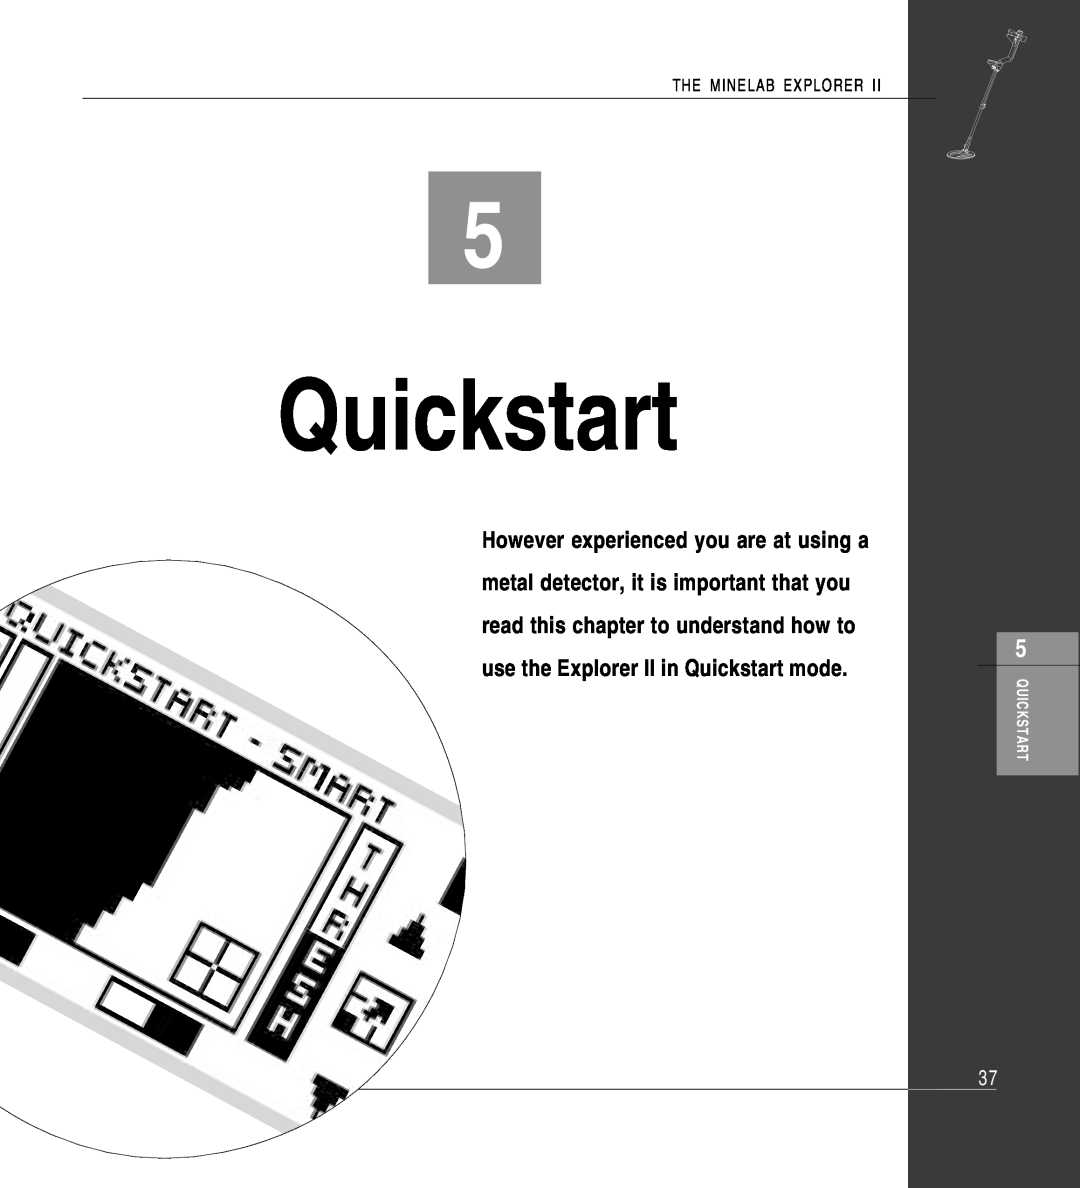 Minelab II quick start Quickstart, read this chapter to understand how to 